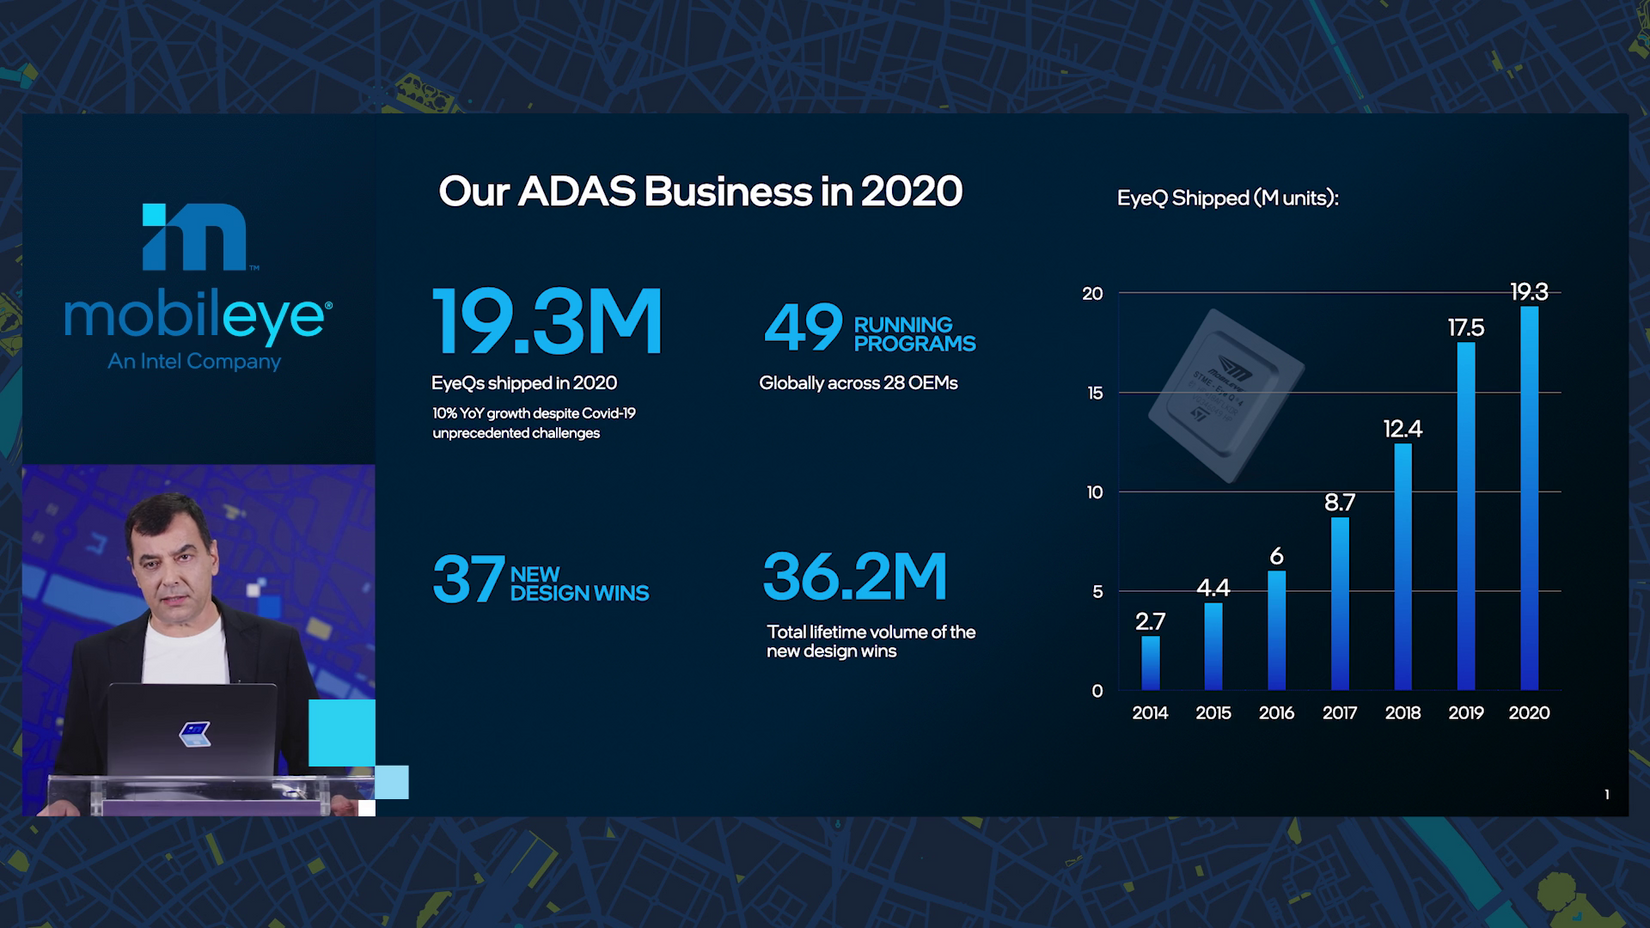 Mobileye ADAS business in 2020